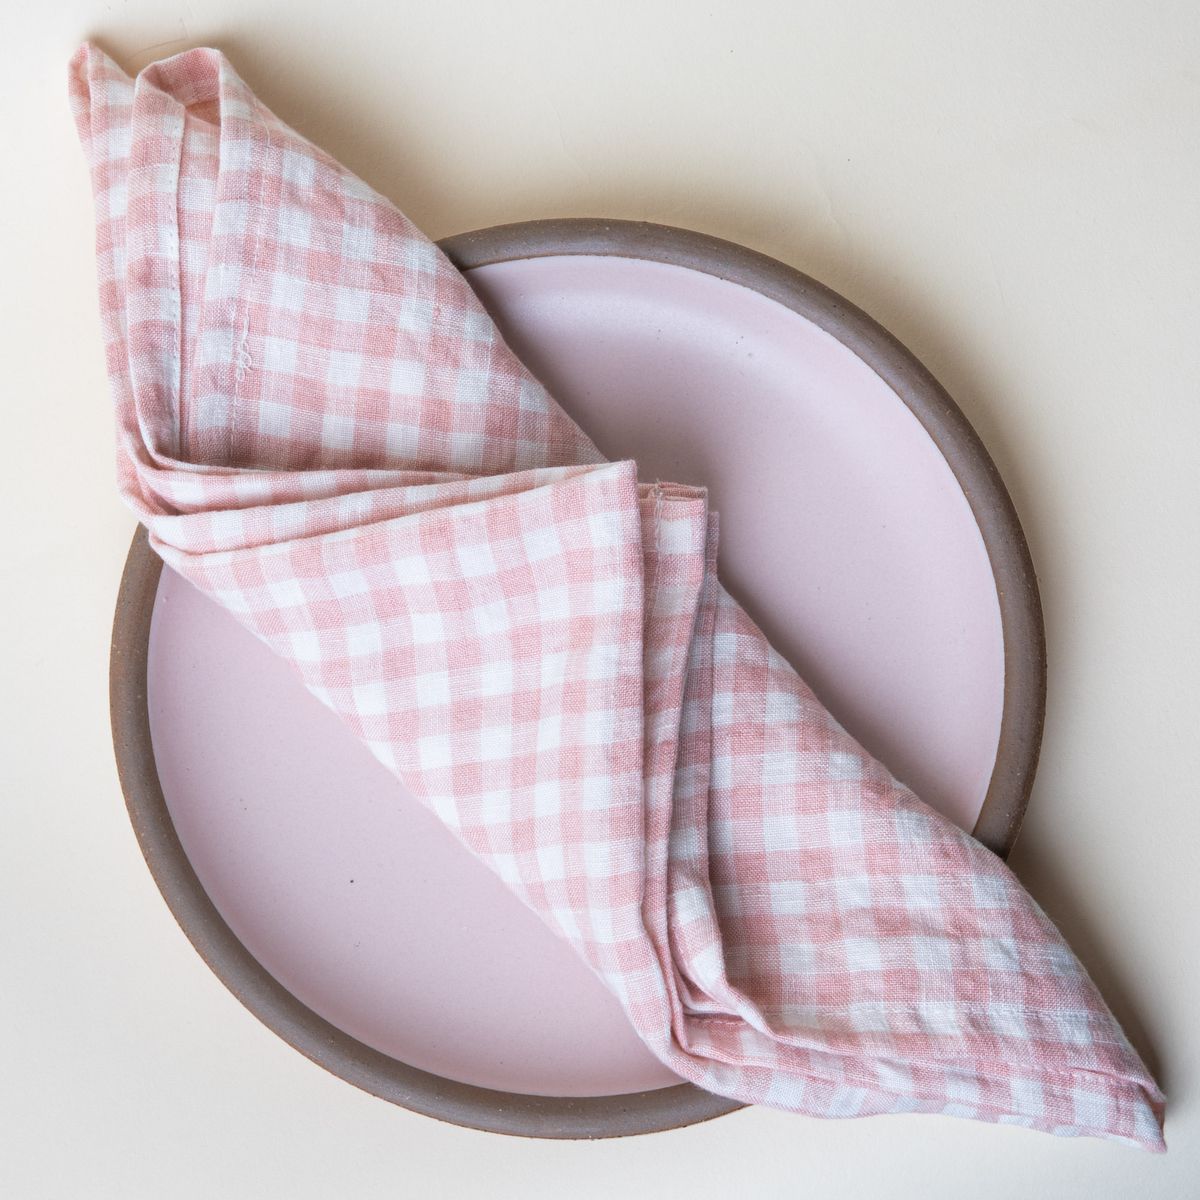 Folded soft pink gingham linen napkin on a soft pink plate